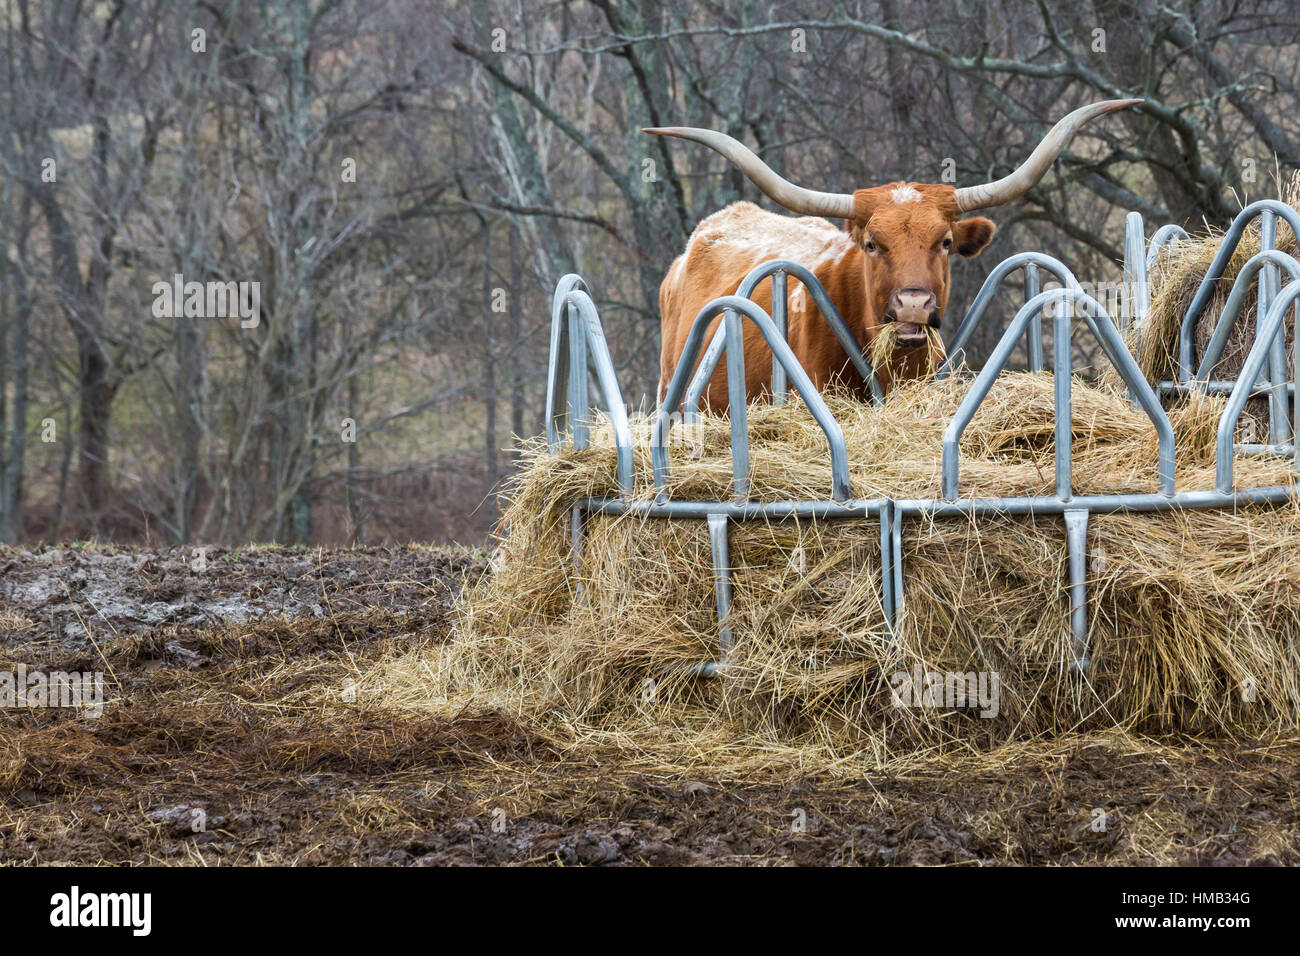 Dry Ridge, Kentucky - A Texas Longhorn cow eating hay. Stock Photo